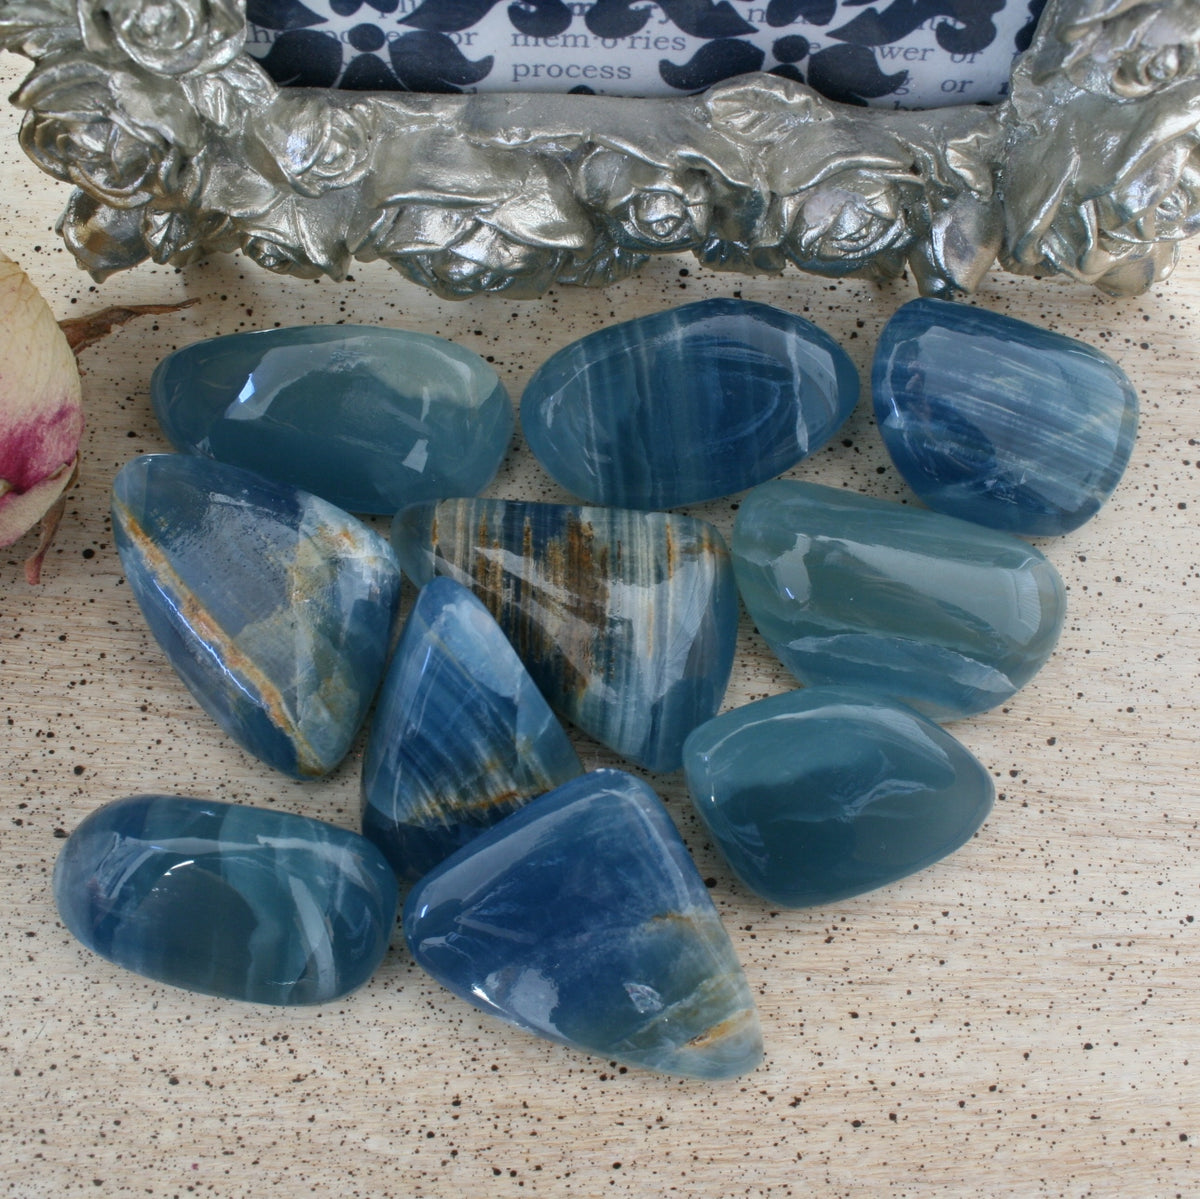 Blue Calcite / Blue Onyx Tumbled Stone from Argentina, also called Lemurian Aquatine Calcite, TUM13